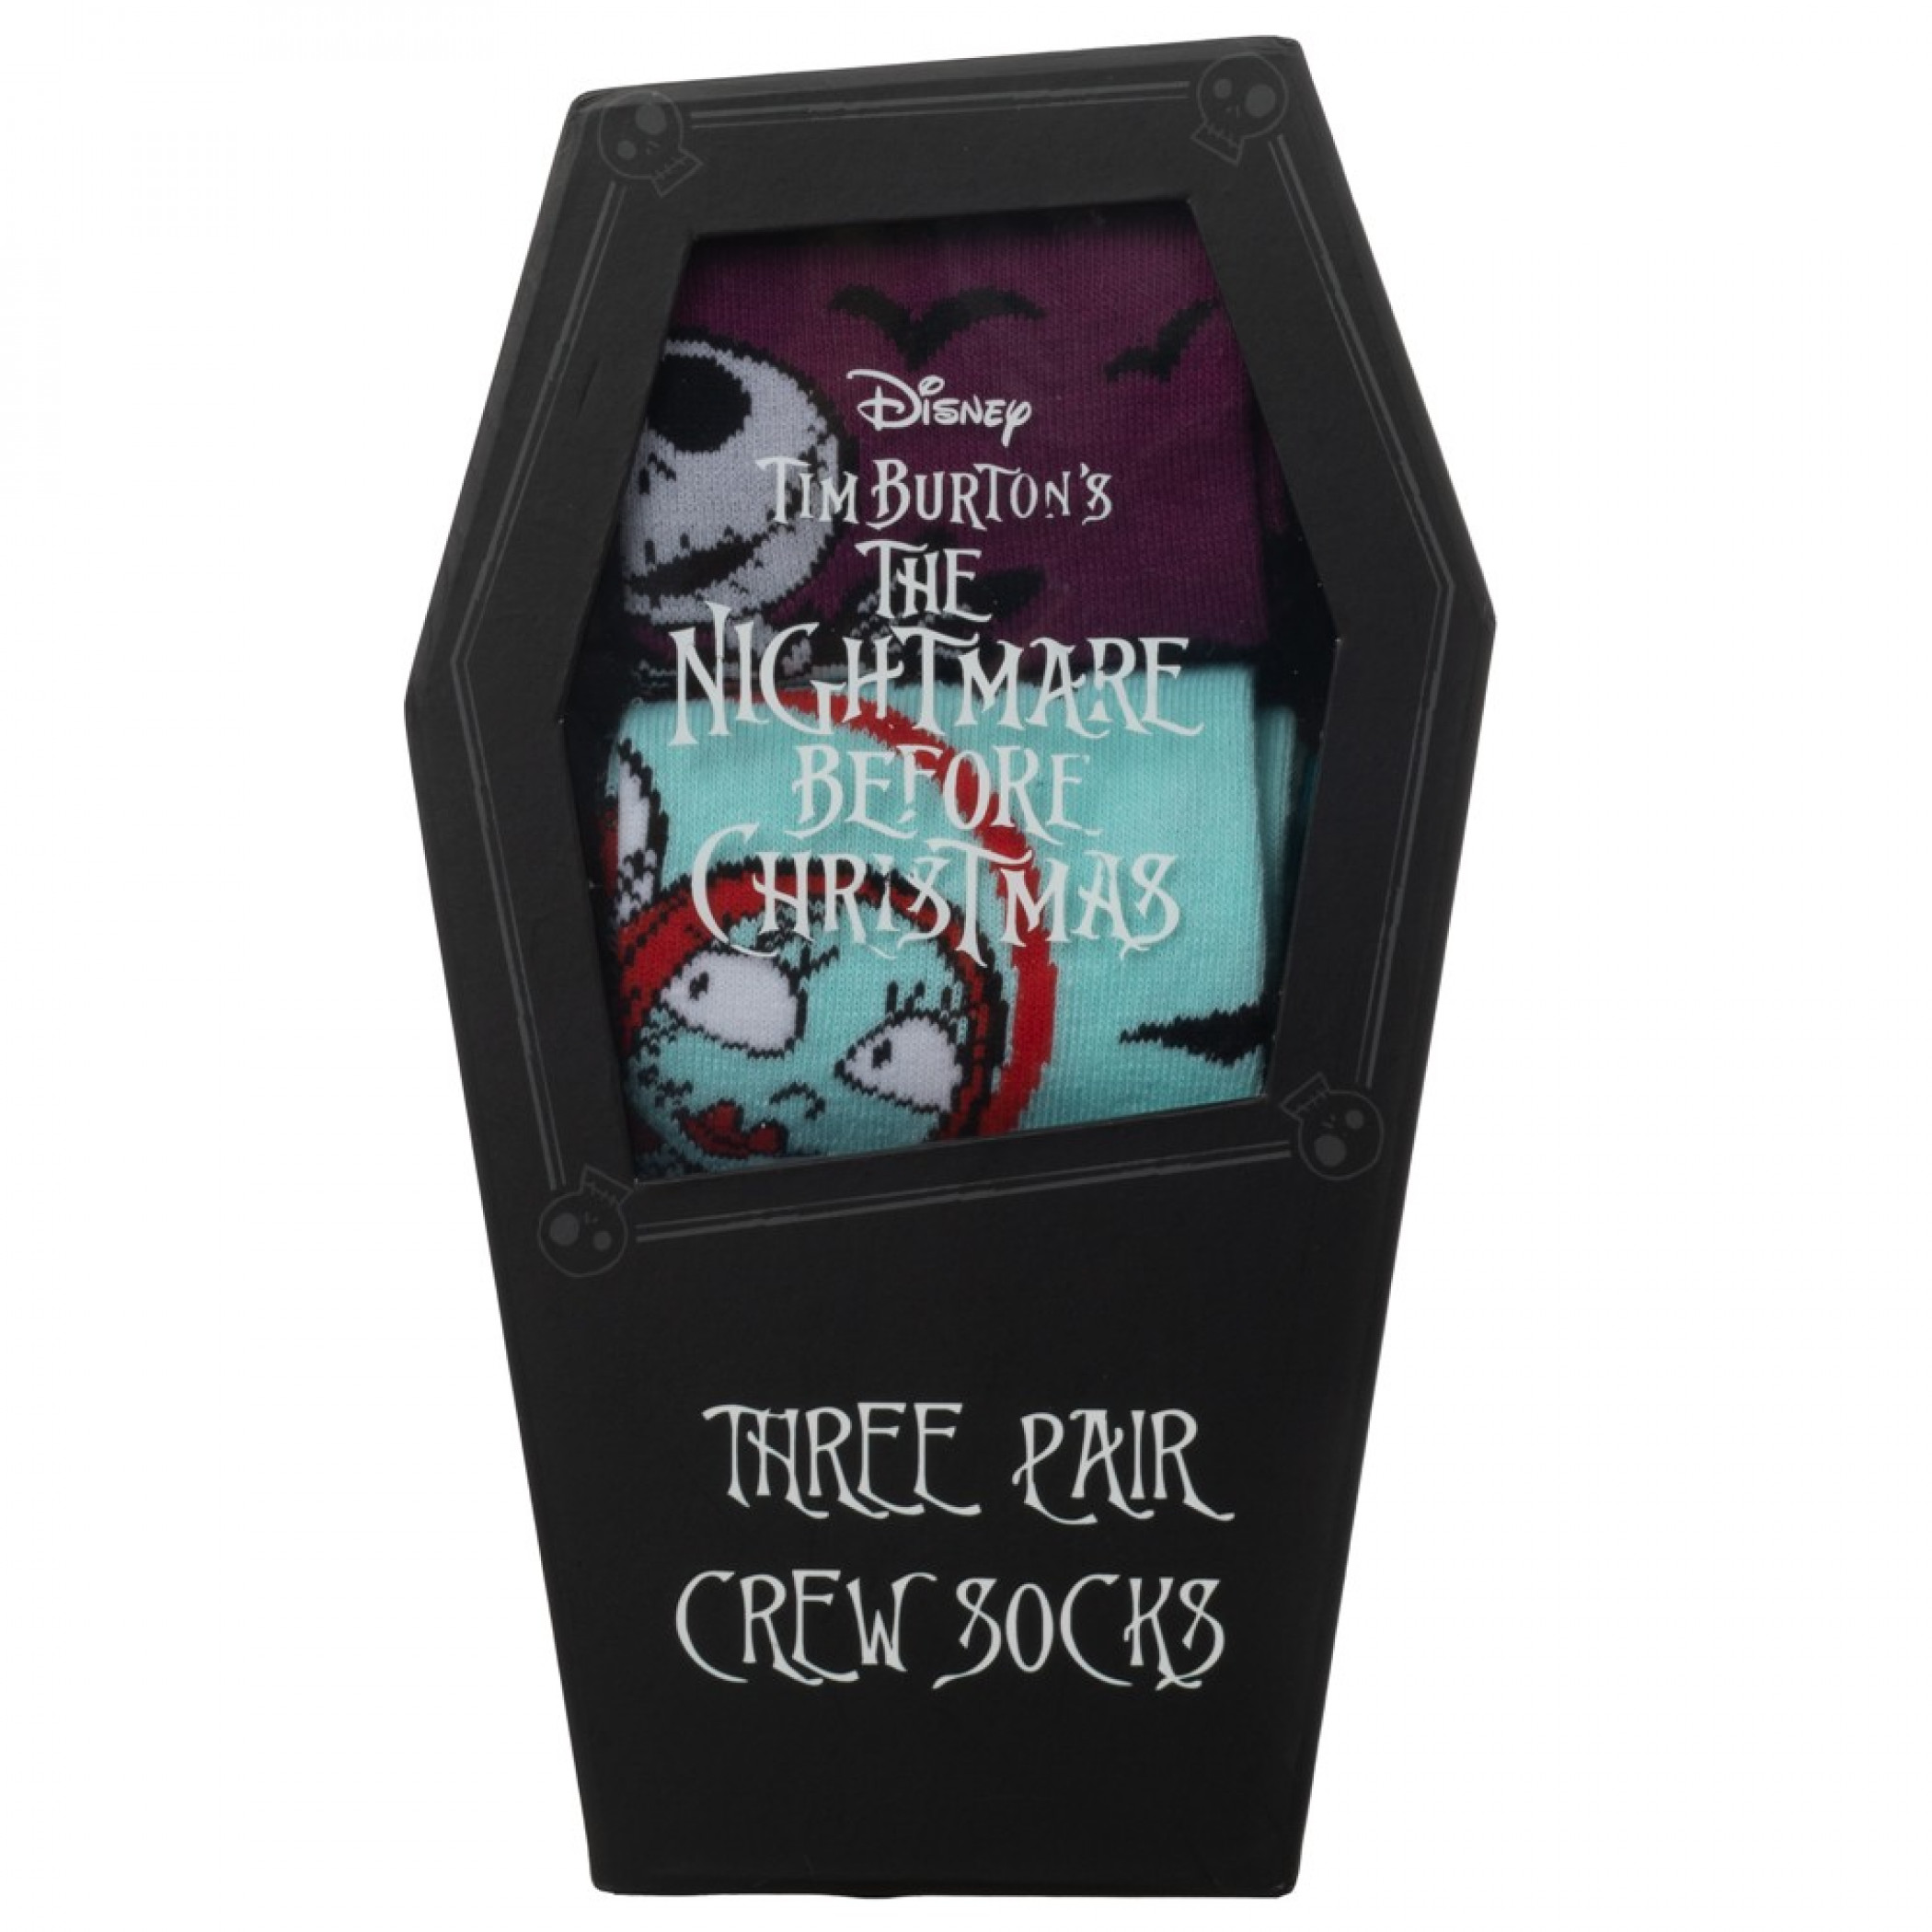 Nightmare Before Christmas Coffin 3-Pair Crew Socks Box Set